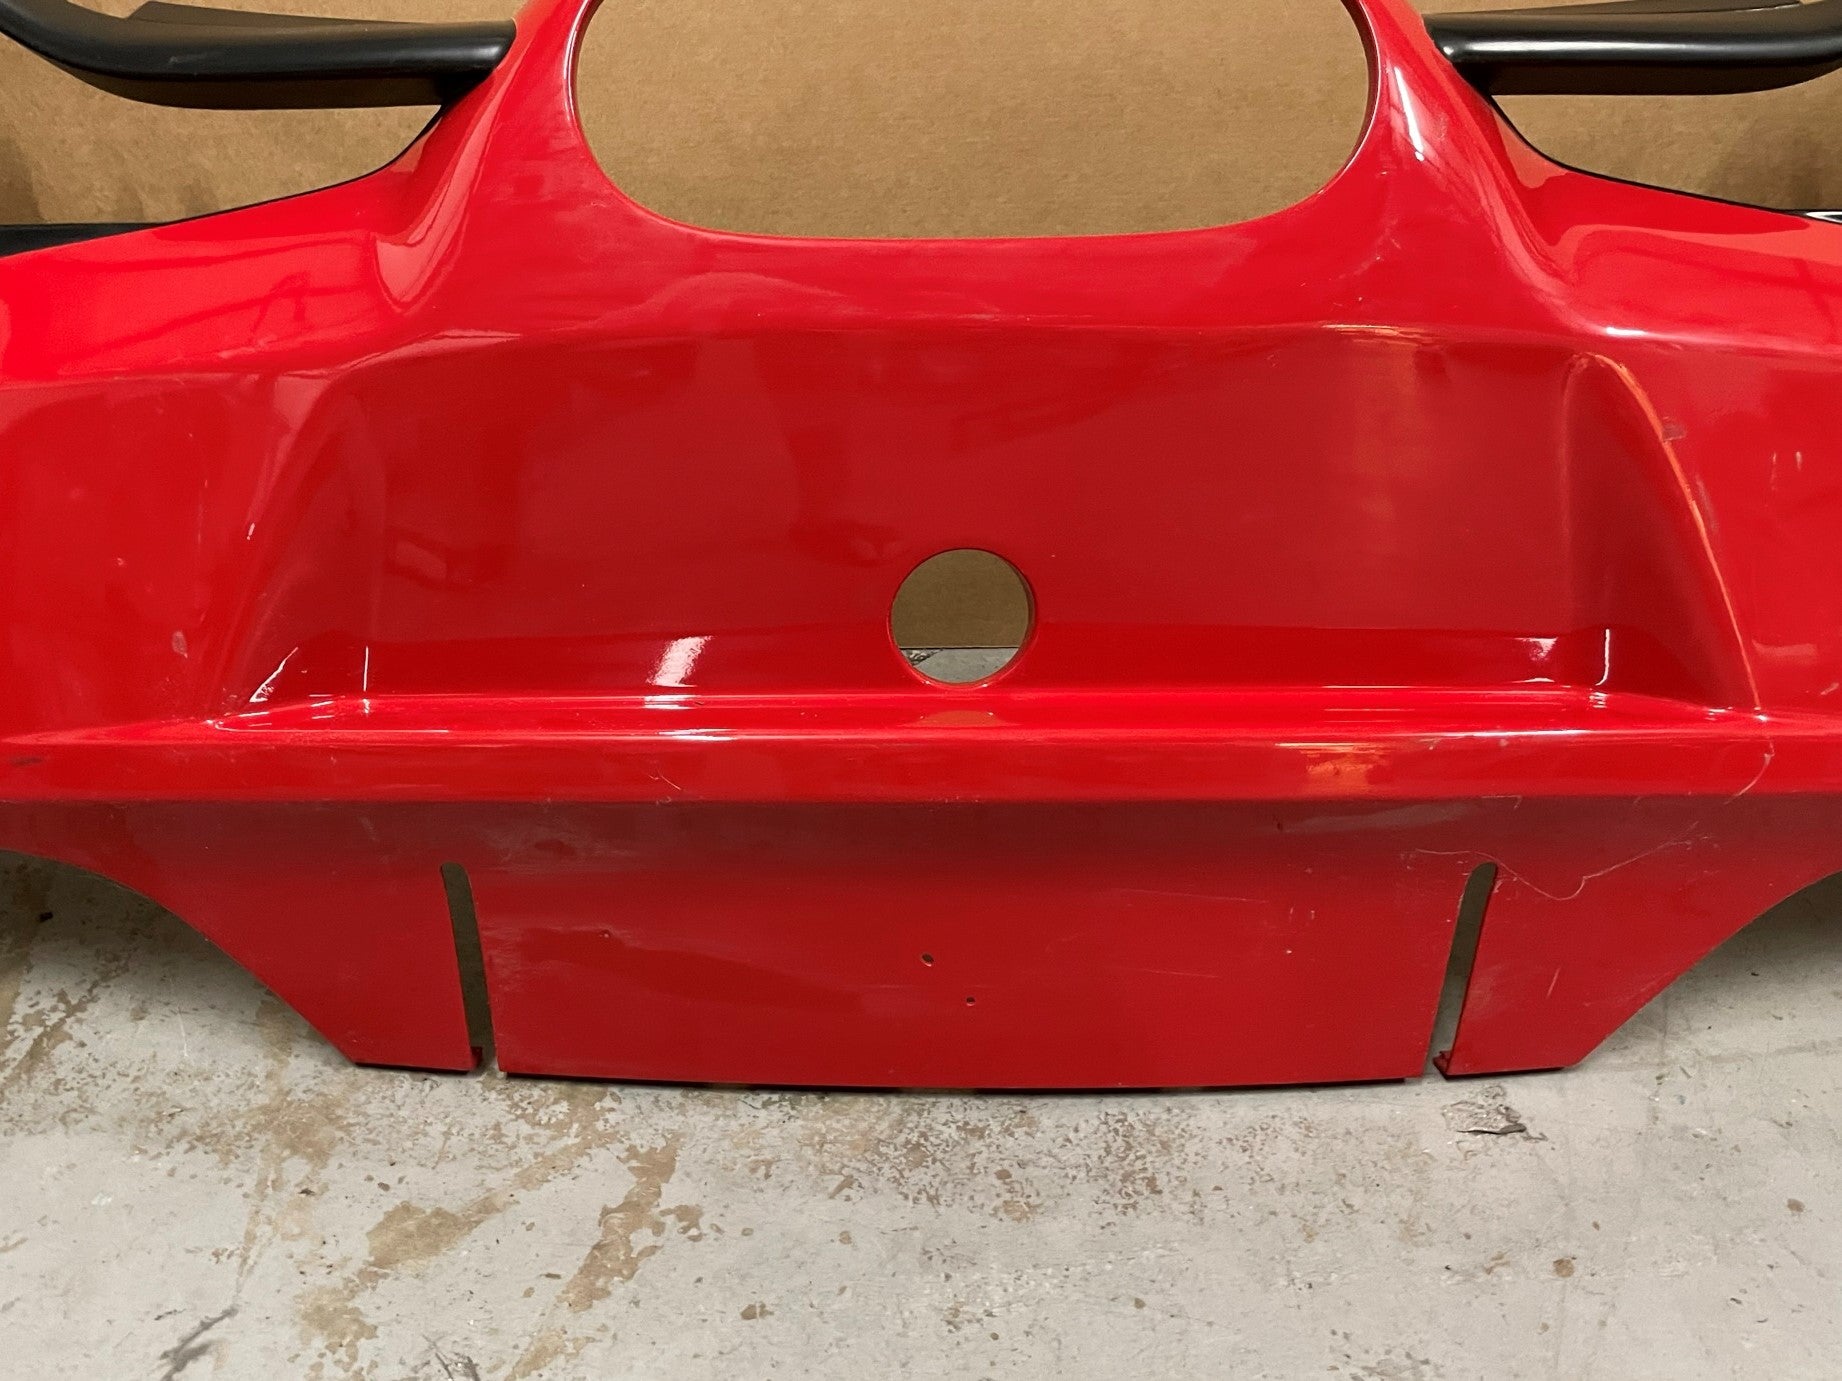 Ferrari 458 Challenge - Complete Rear Bumper - 86283410 / Red w/ Fog Lights